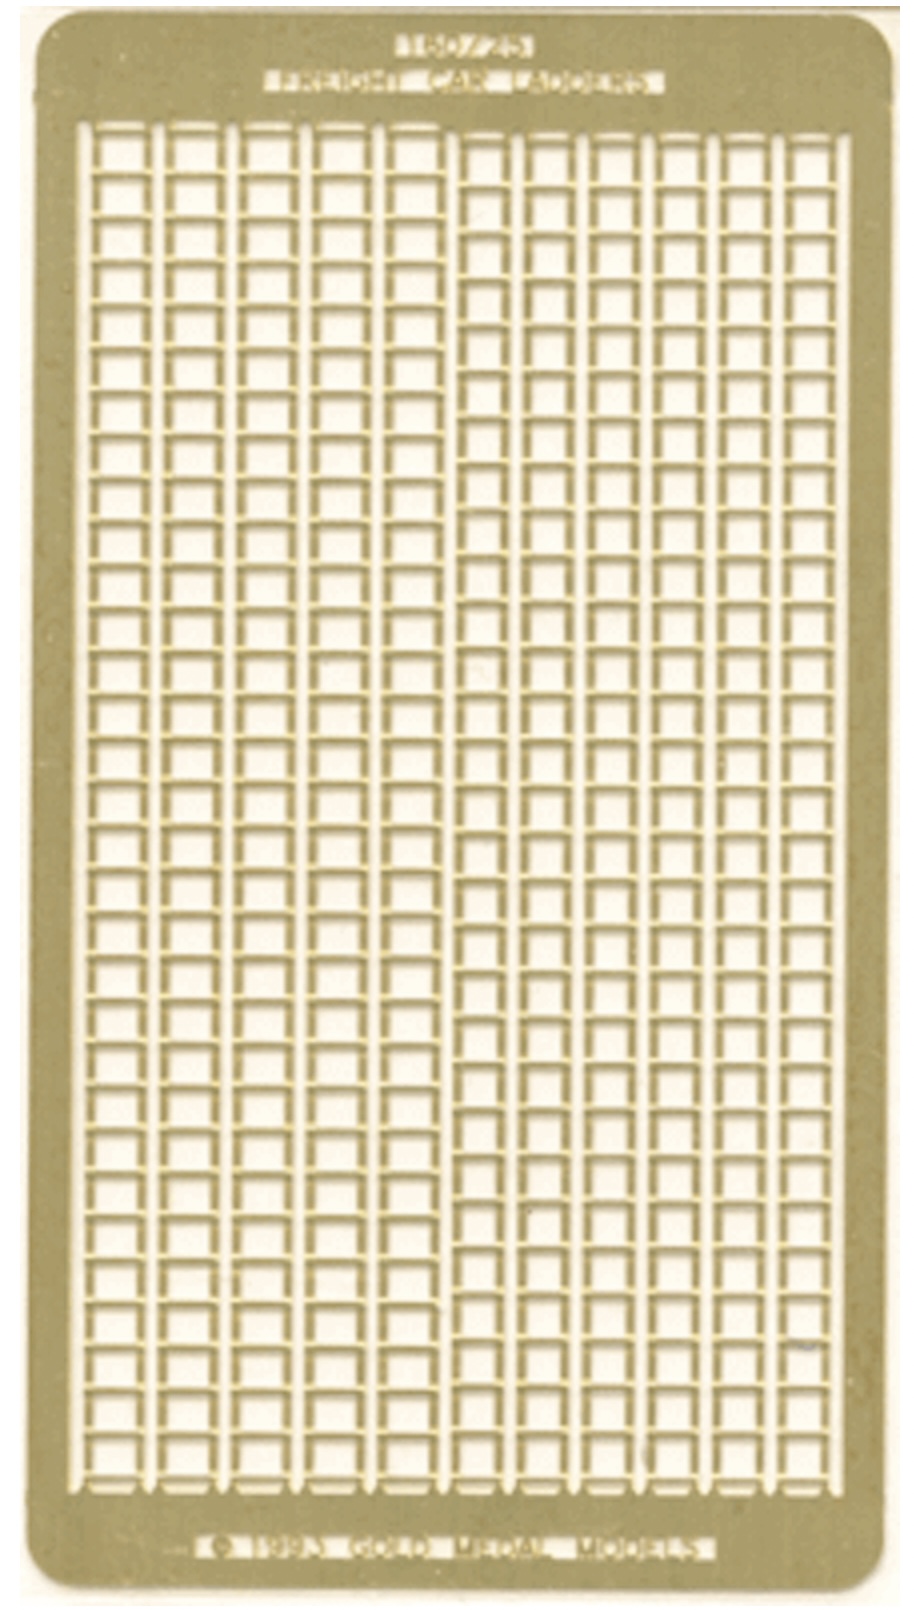 N Scale - Gold Medal Models - 160-25 - Accessories, Railroad, Industrial, Ladders - Scenery